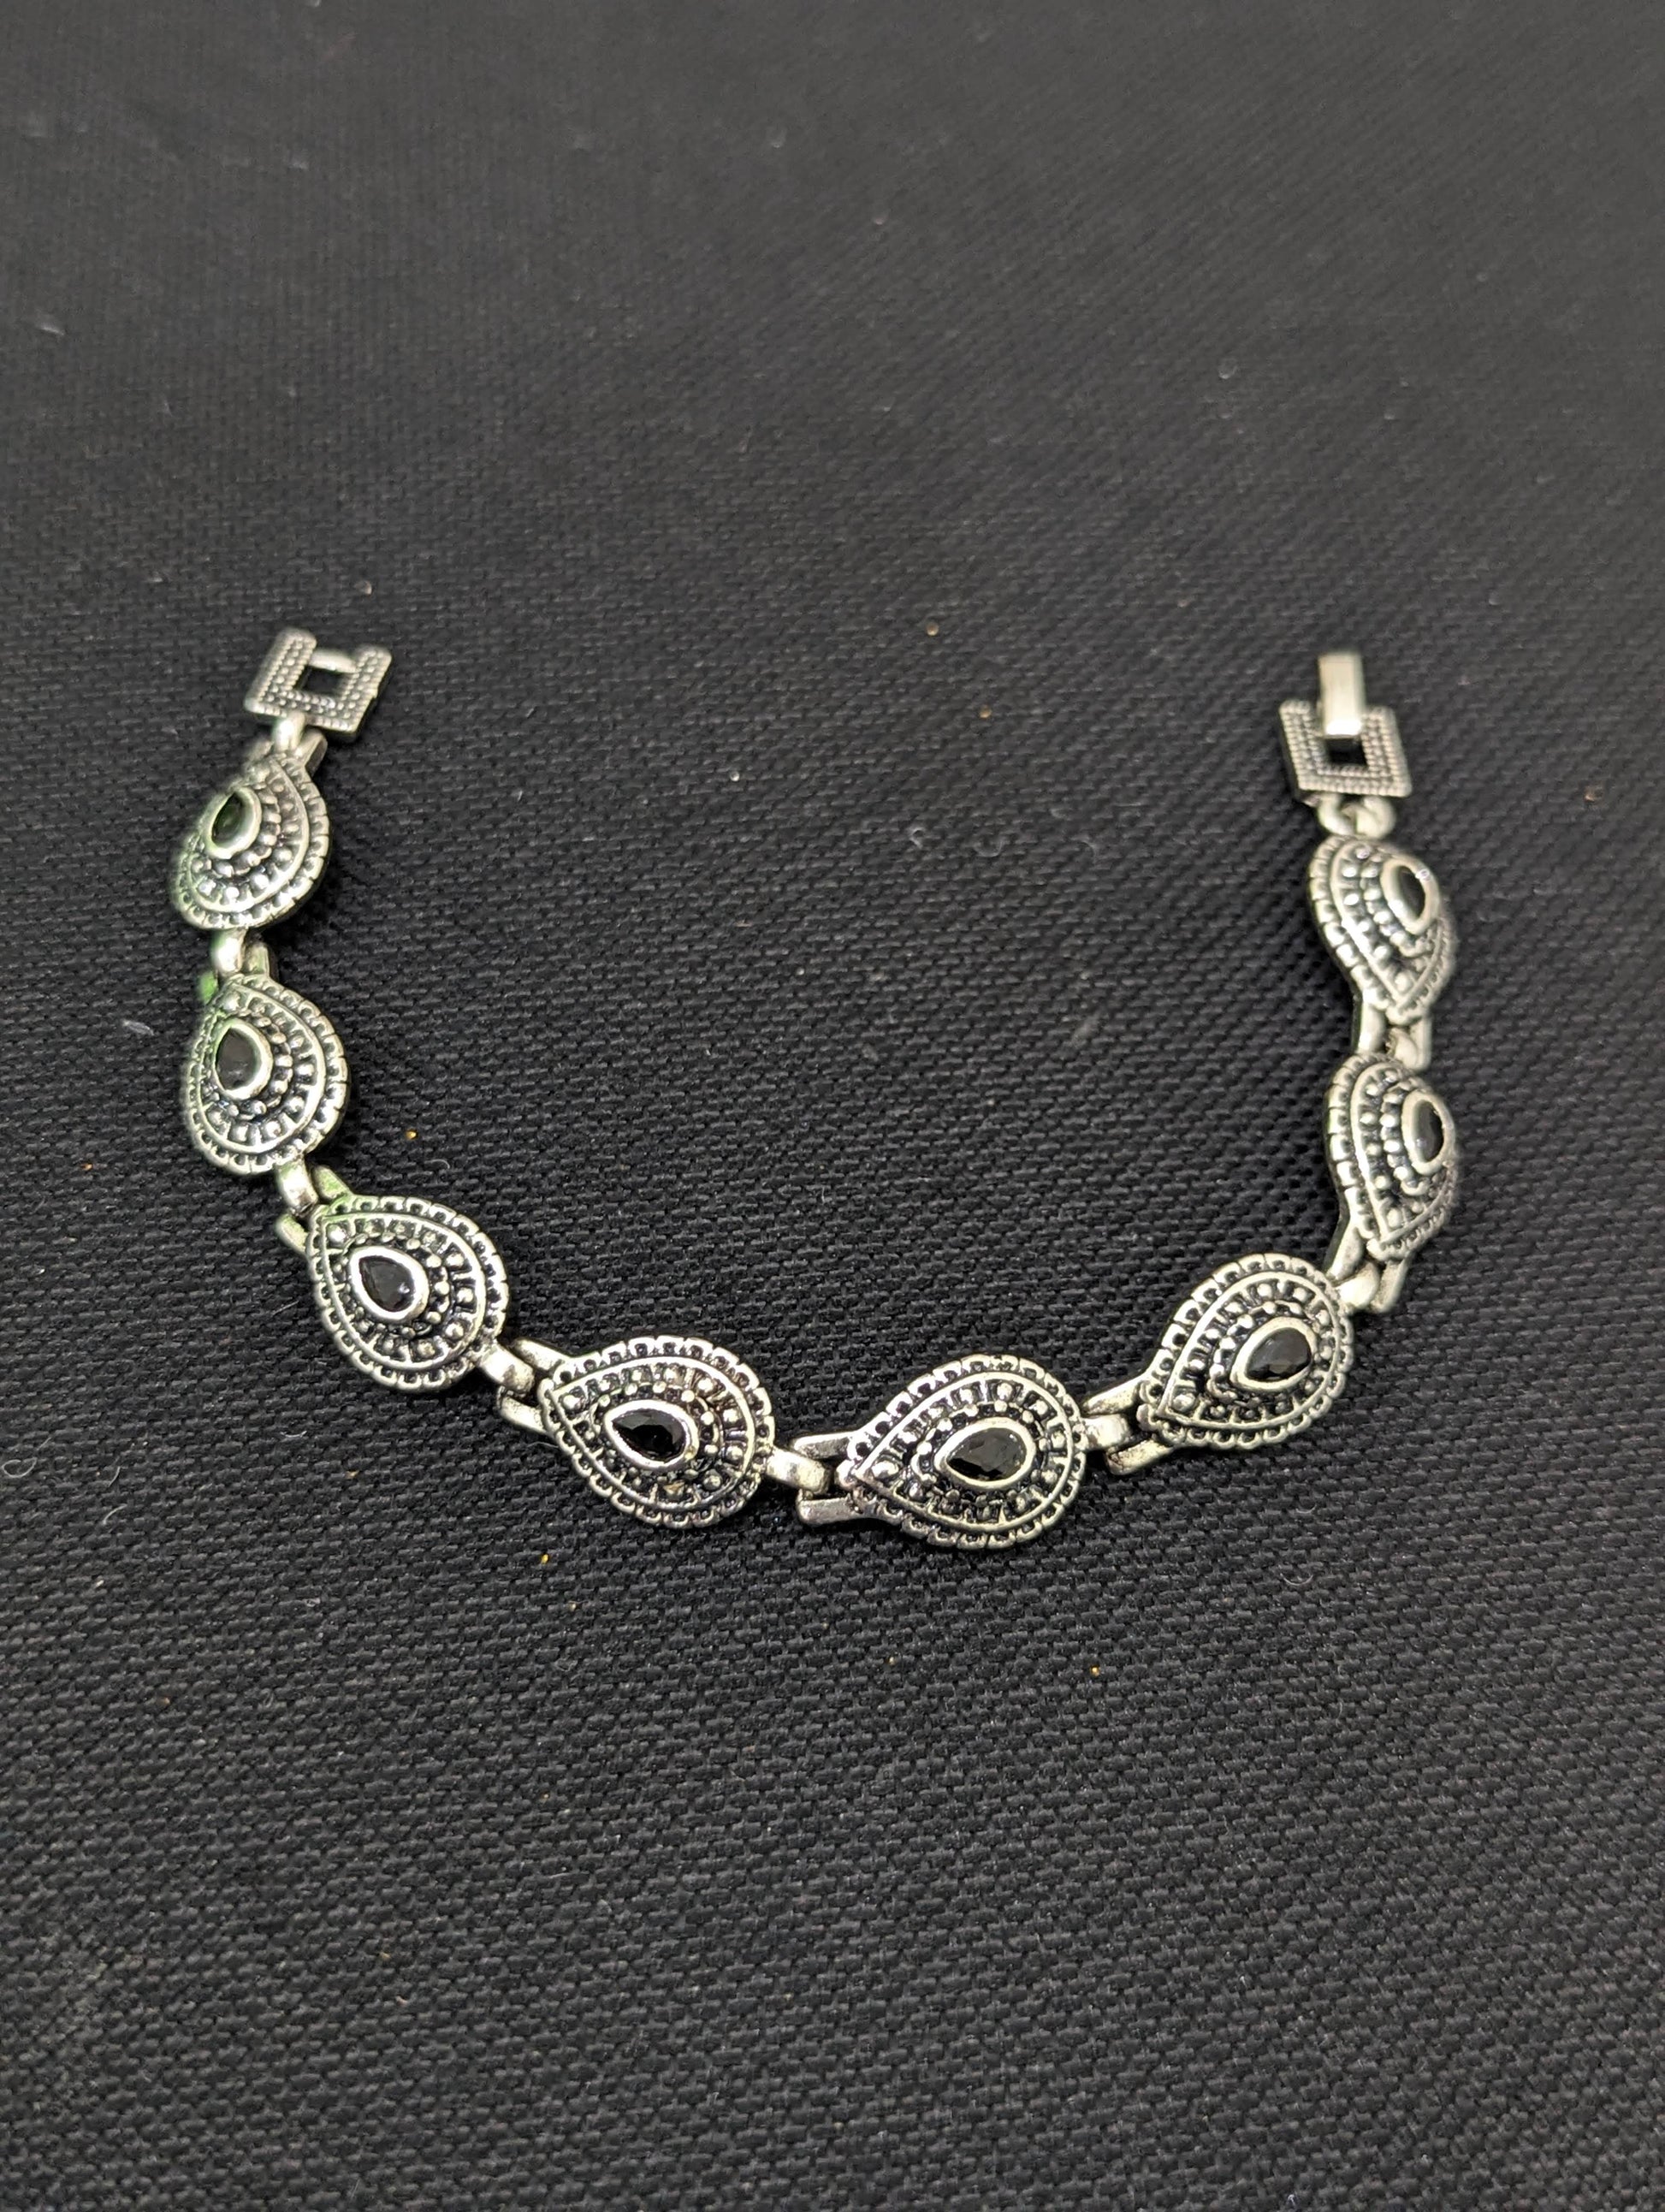 Antique Silver tear drop Bracelet - Simpliful